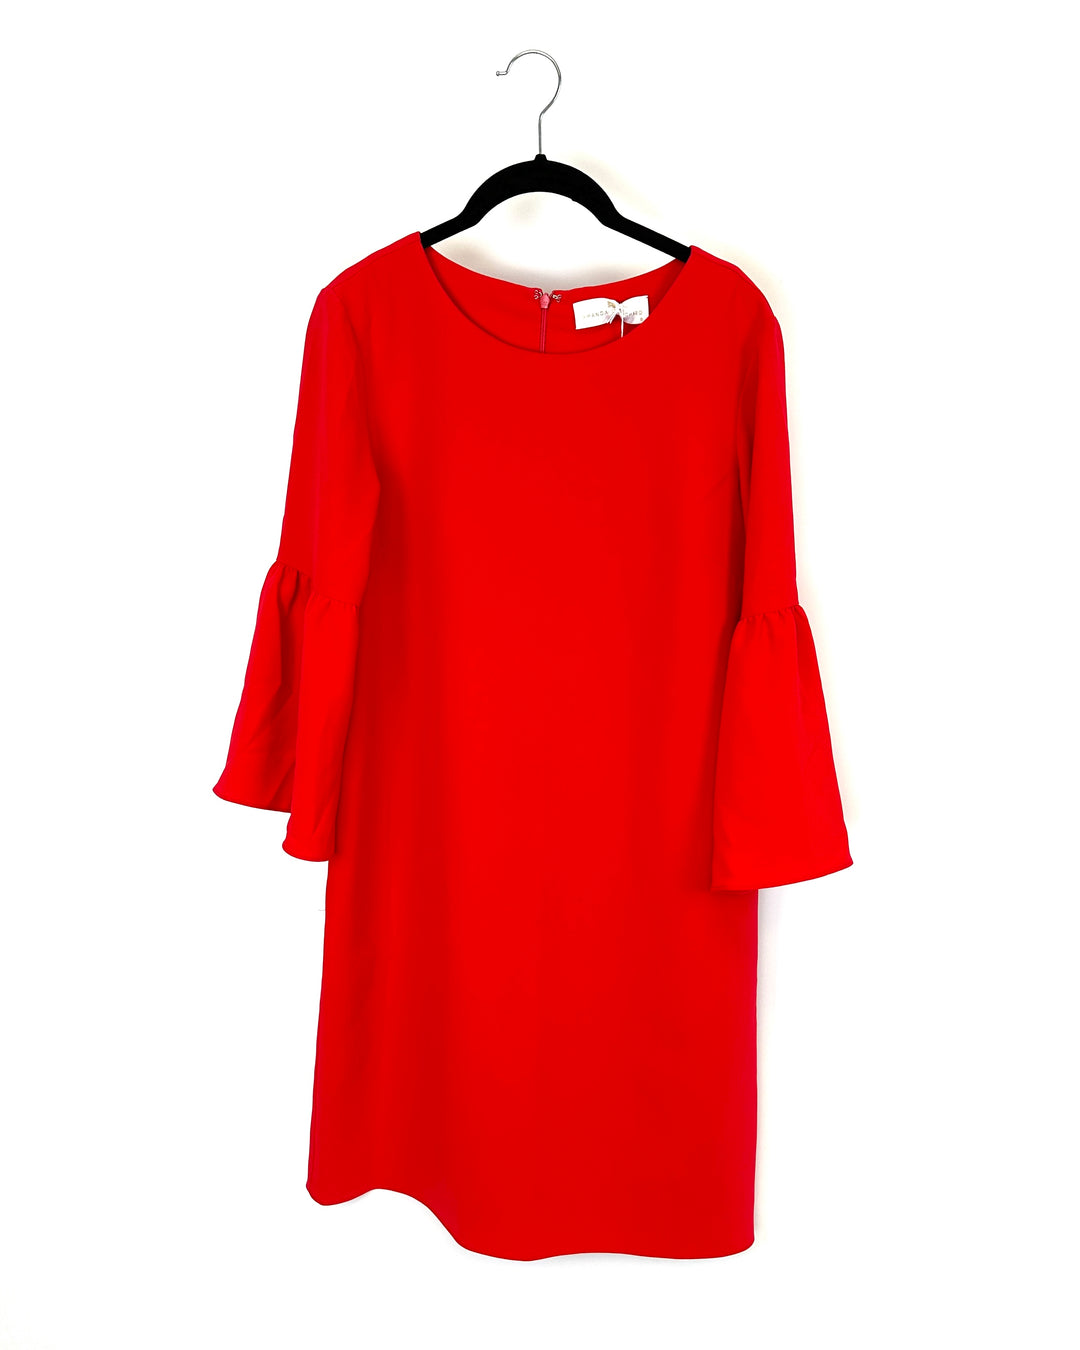 Red Quarter Sleeve Dress - Size 4